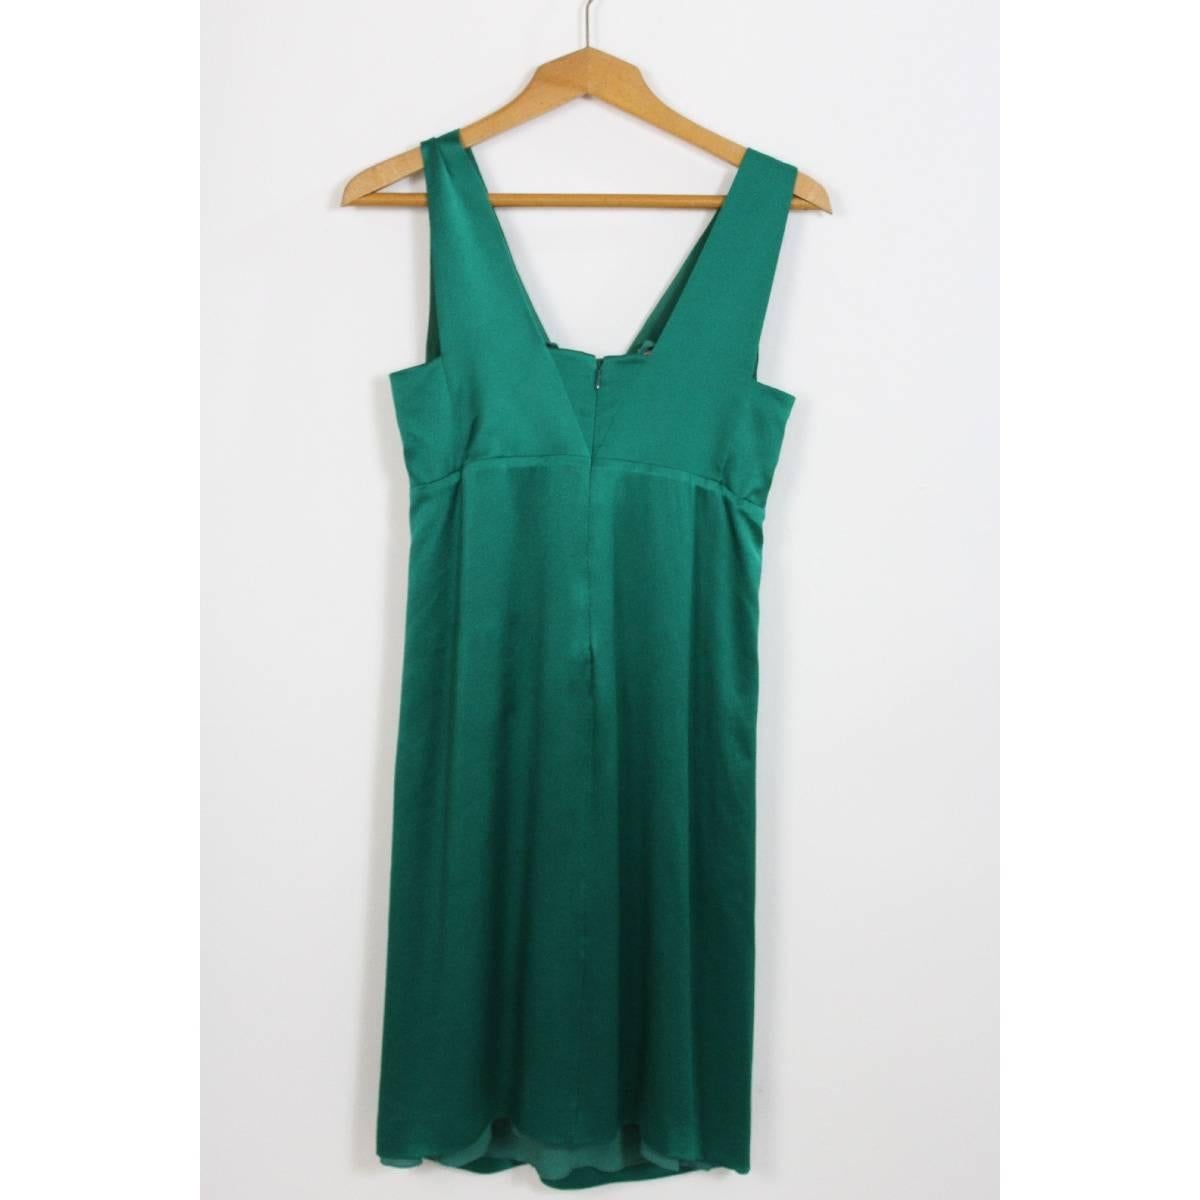 Blue Alberta Ferretti silk emerald evening dress size 40 it made italy 2000s